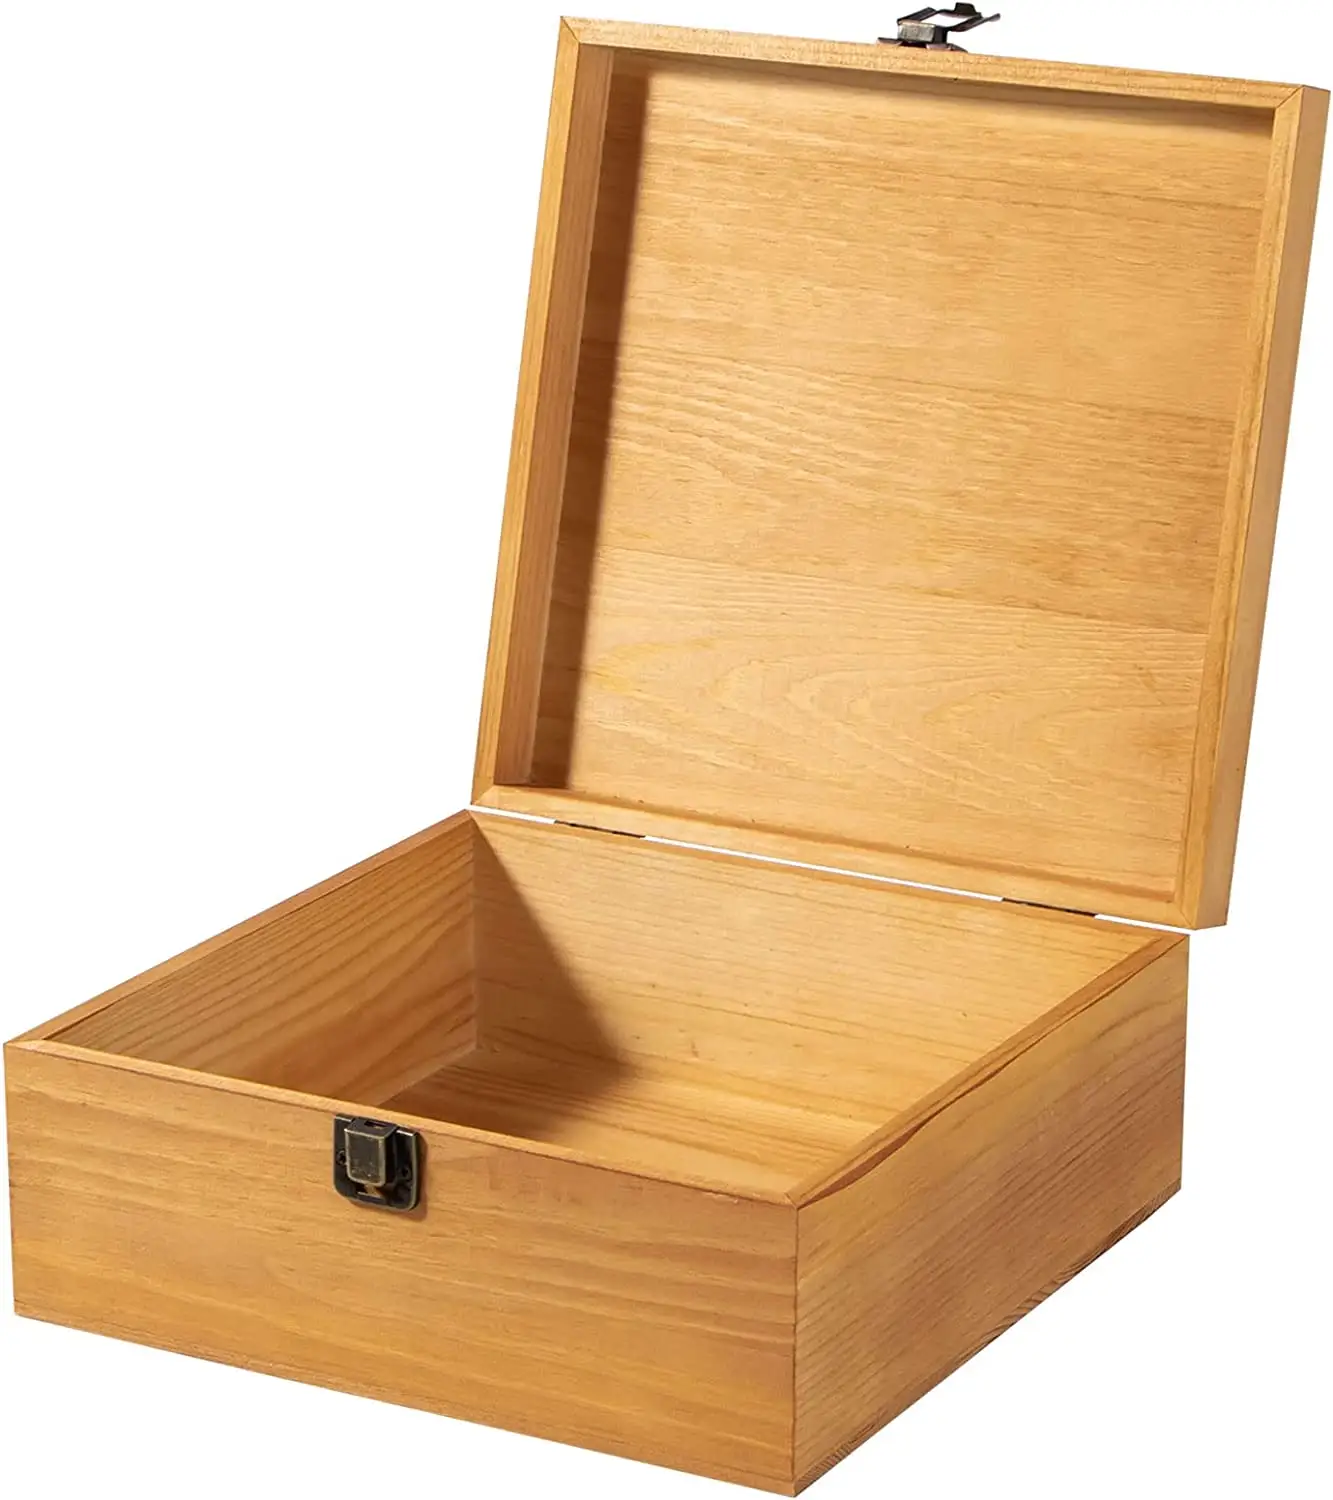 custom Large wooden stash Keepsake Box rustic Wood Boxes Crafts Vintage Wooden Storage Box with Hinged Lid